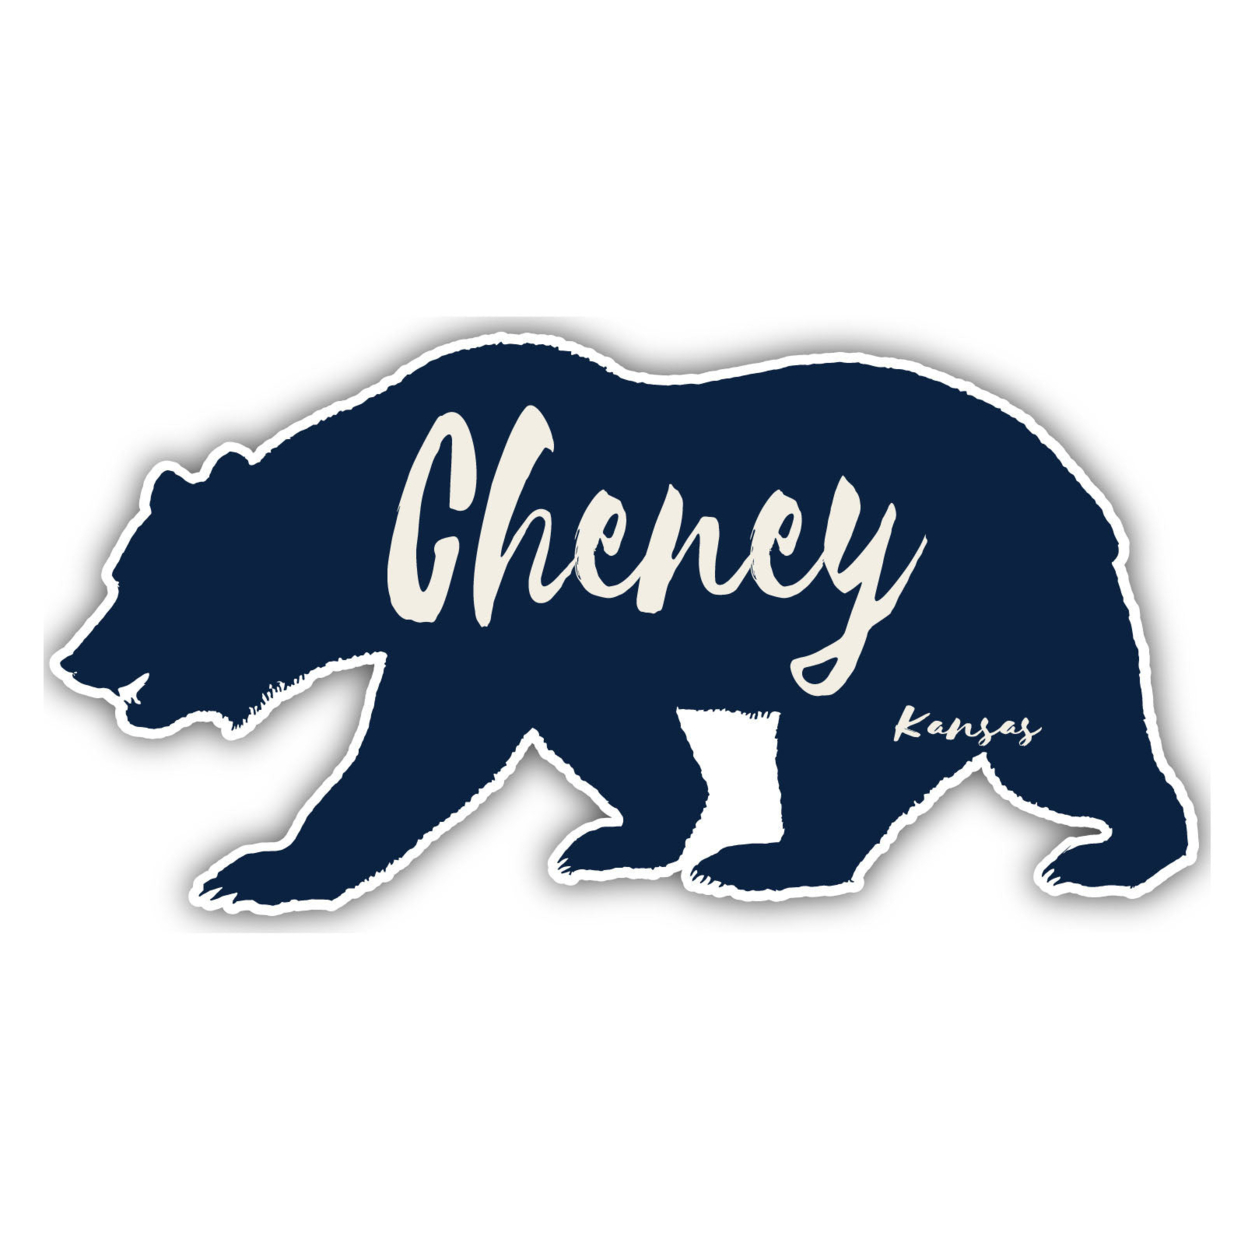 Cheney Kansas Souvenir Decorative Stickers (Choose Theme And Size) - Single Unit, 2-Inch, Bear